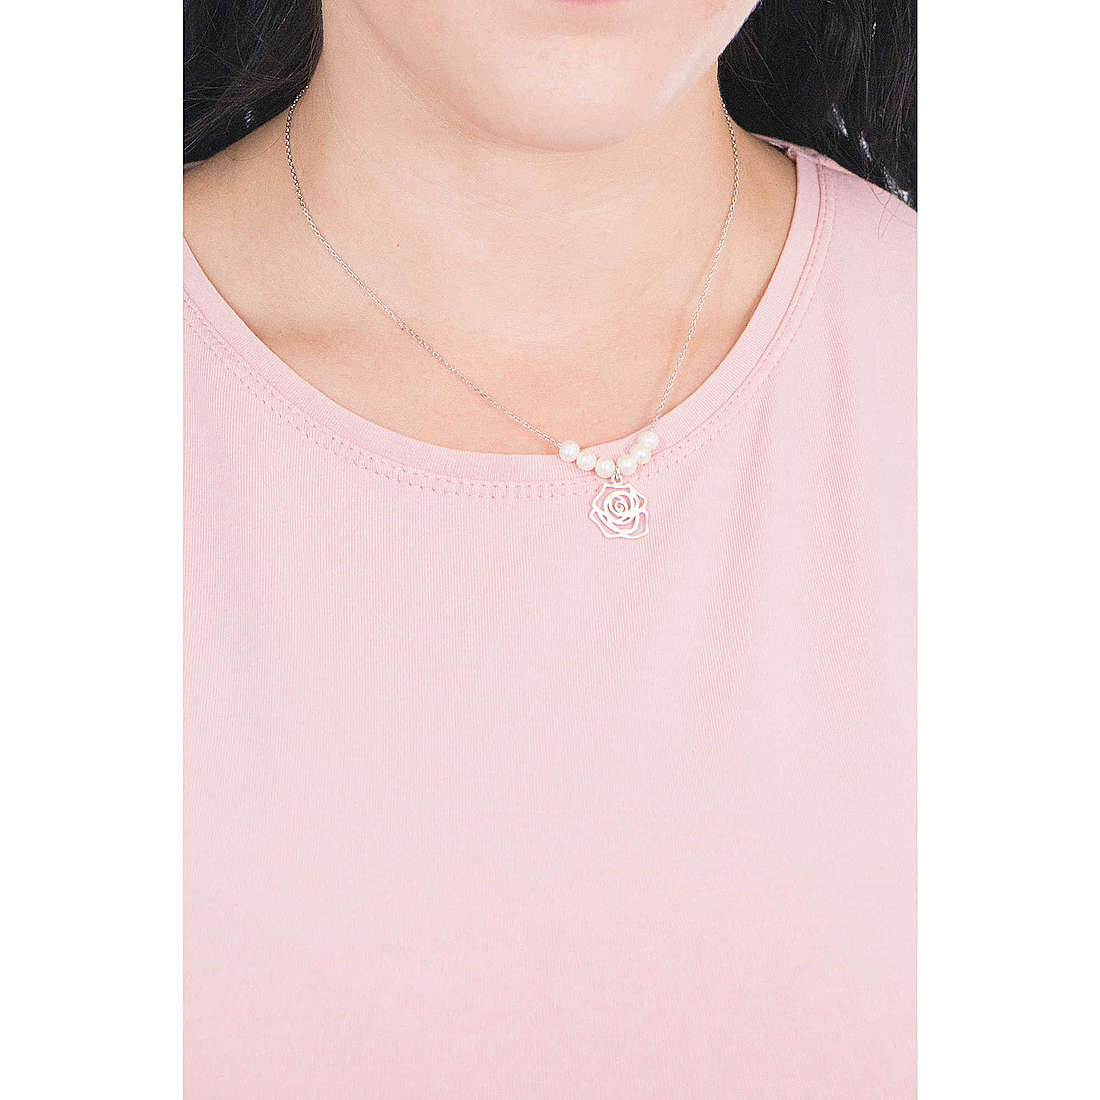 GioiaPura necklaces woman LPFPN 0068 wearing